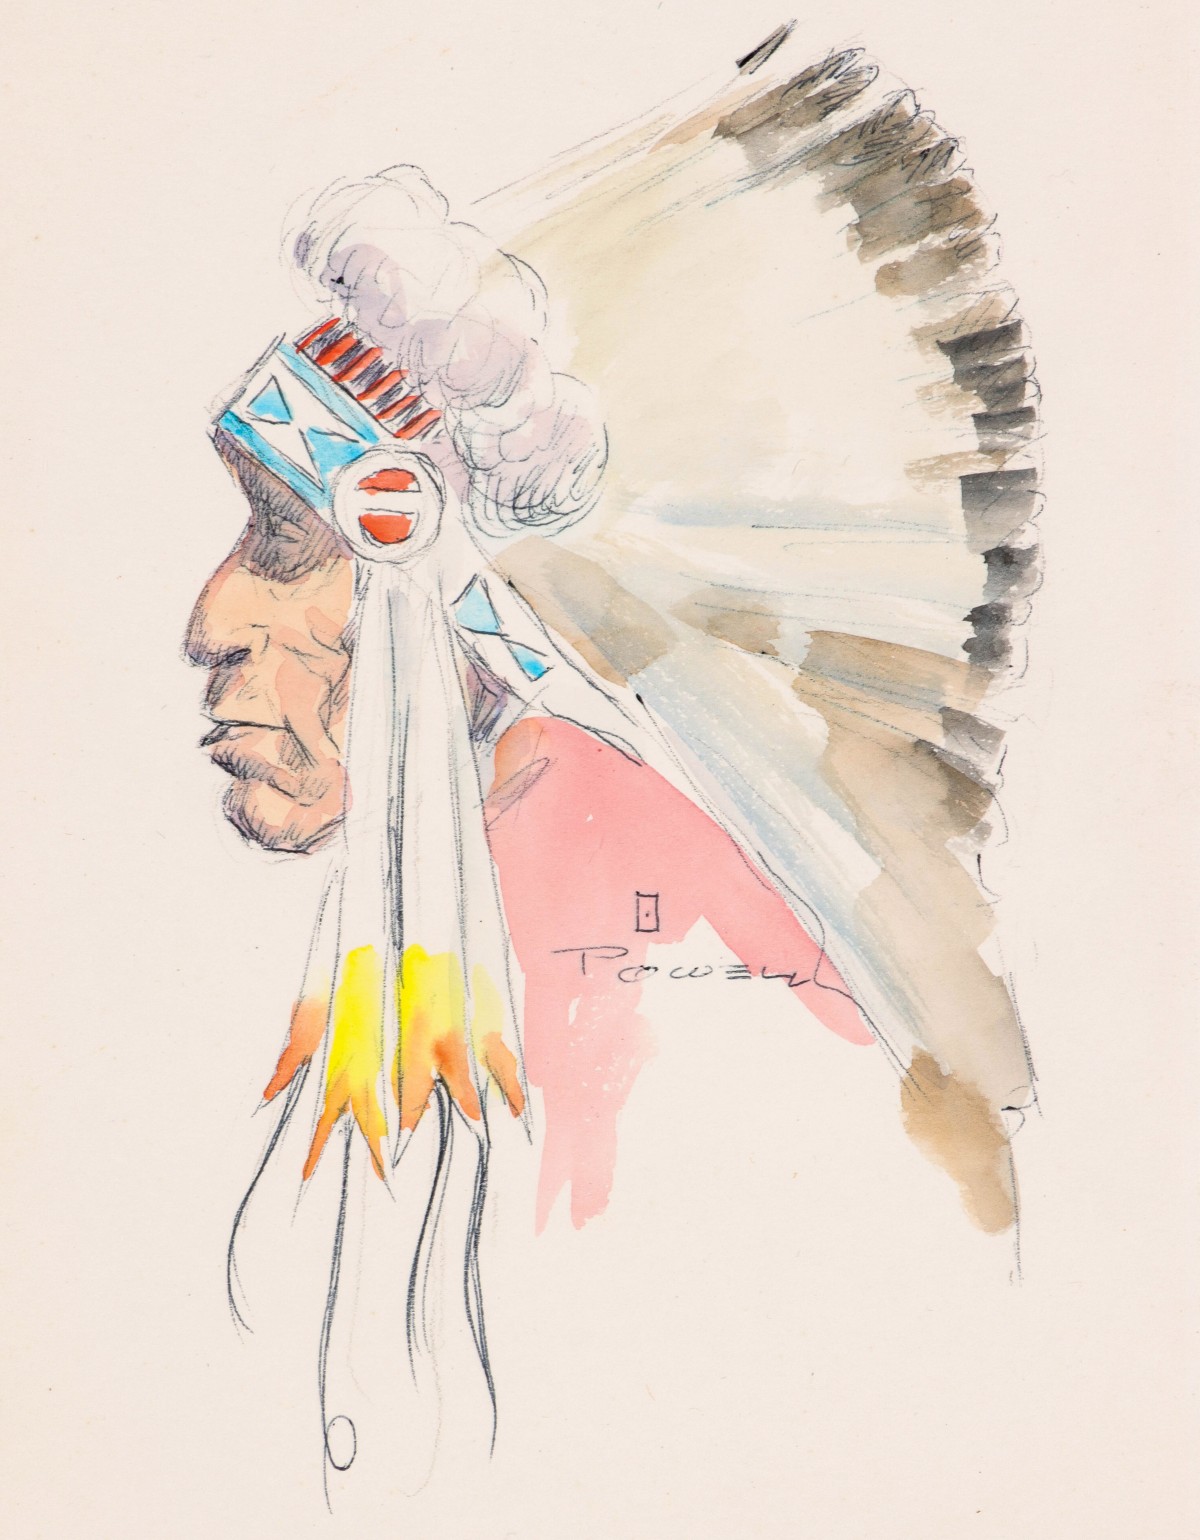 ACE POWELL (1912-1978) INK WASH ON ARTIST'S BOARD